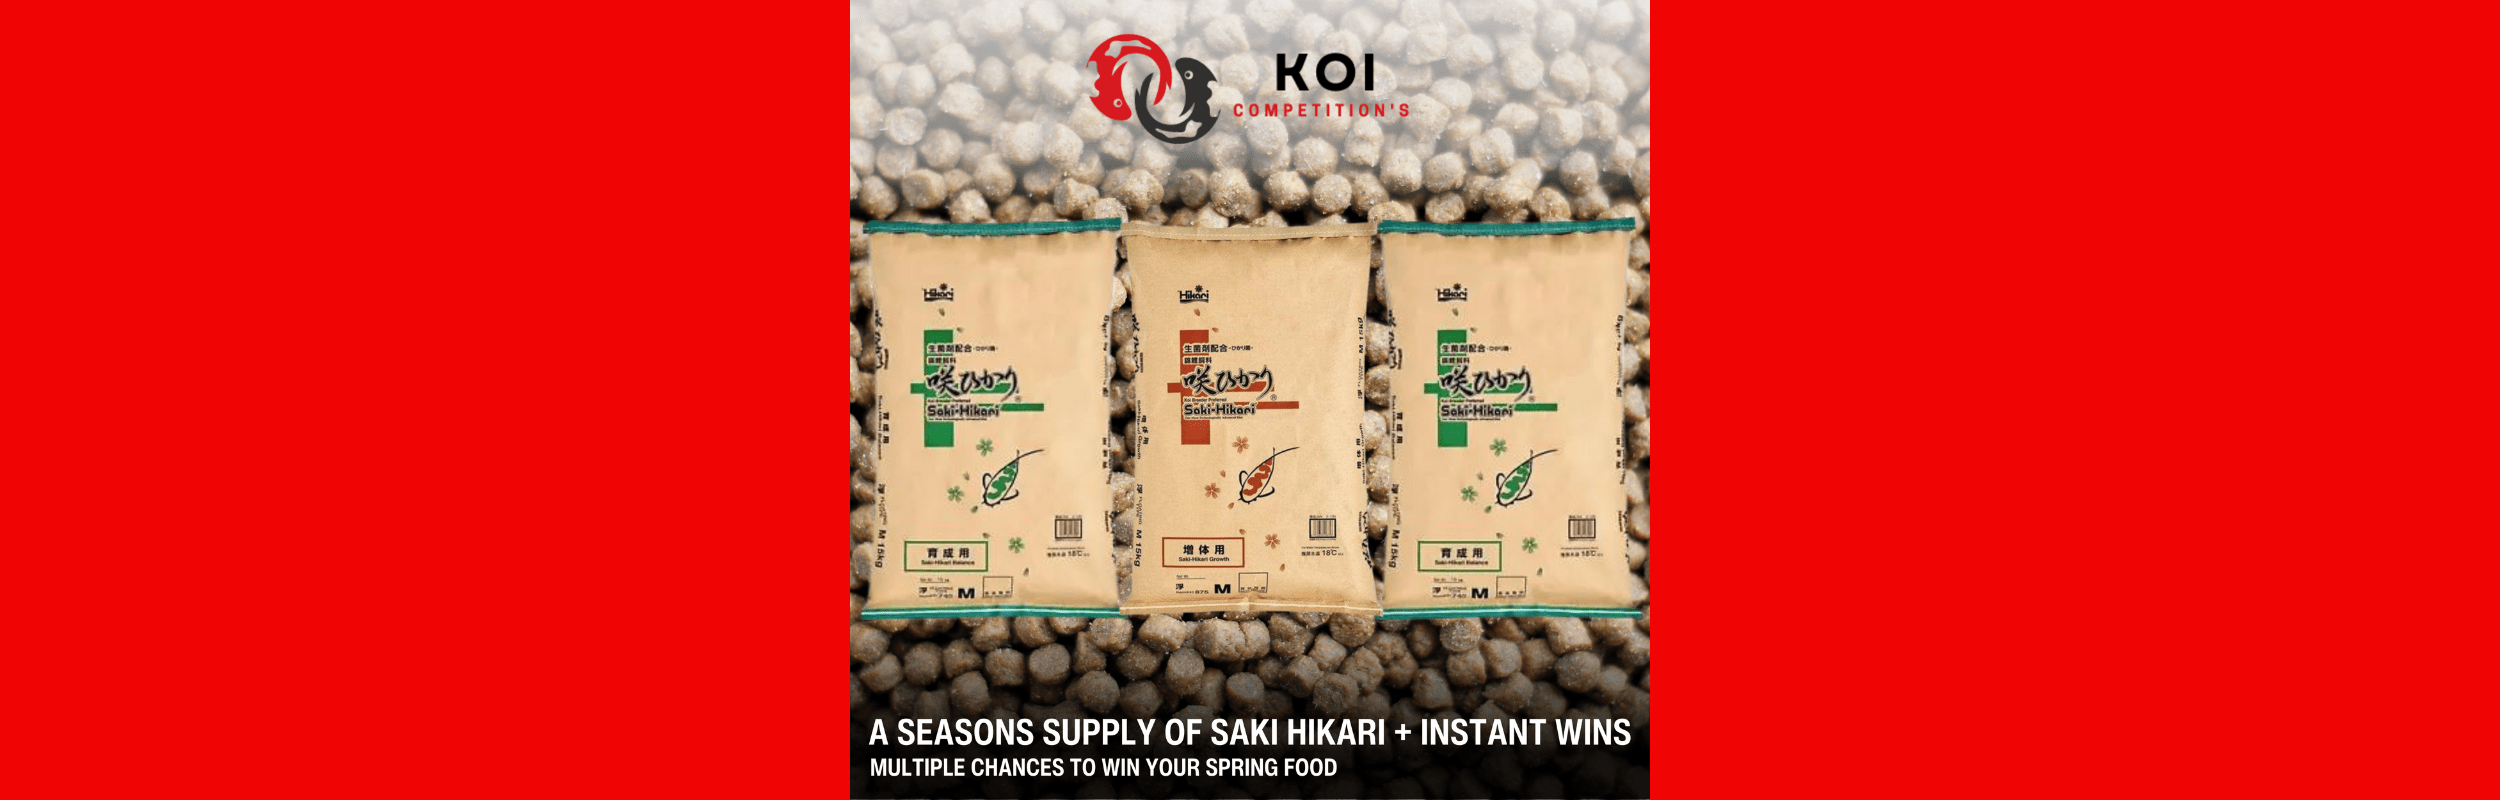 A SEASONS SUPPLY OF SAKI HIKARI + INSTANT WINS